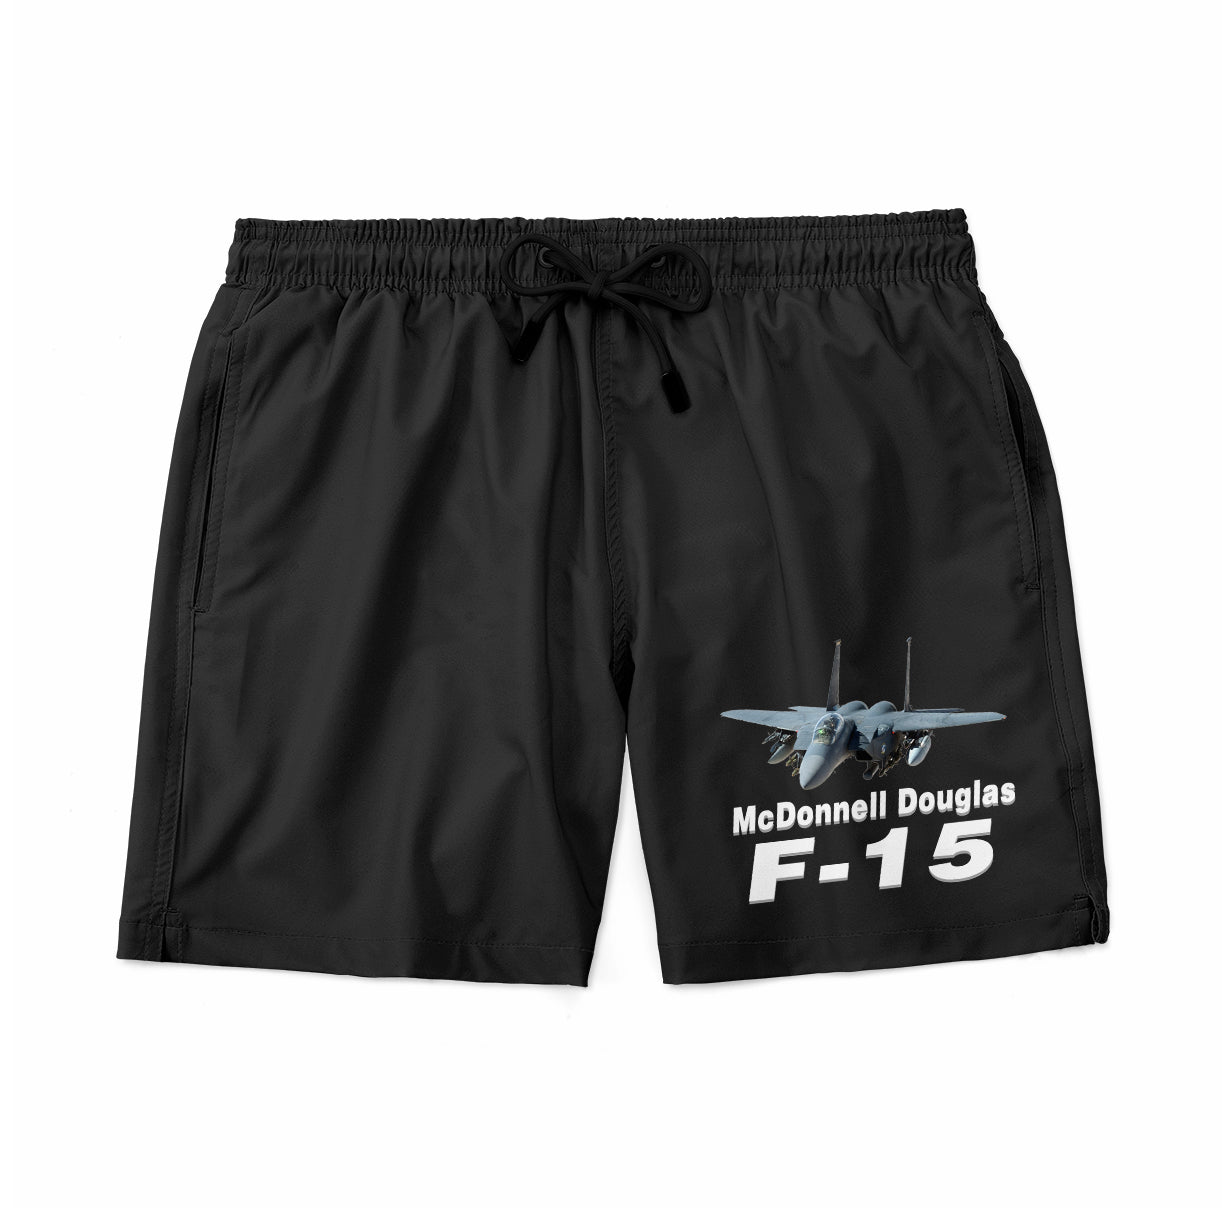 The McDonnell Douglas F15 Designed Swim Trunks & Shorts